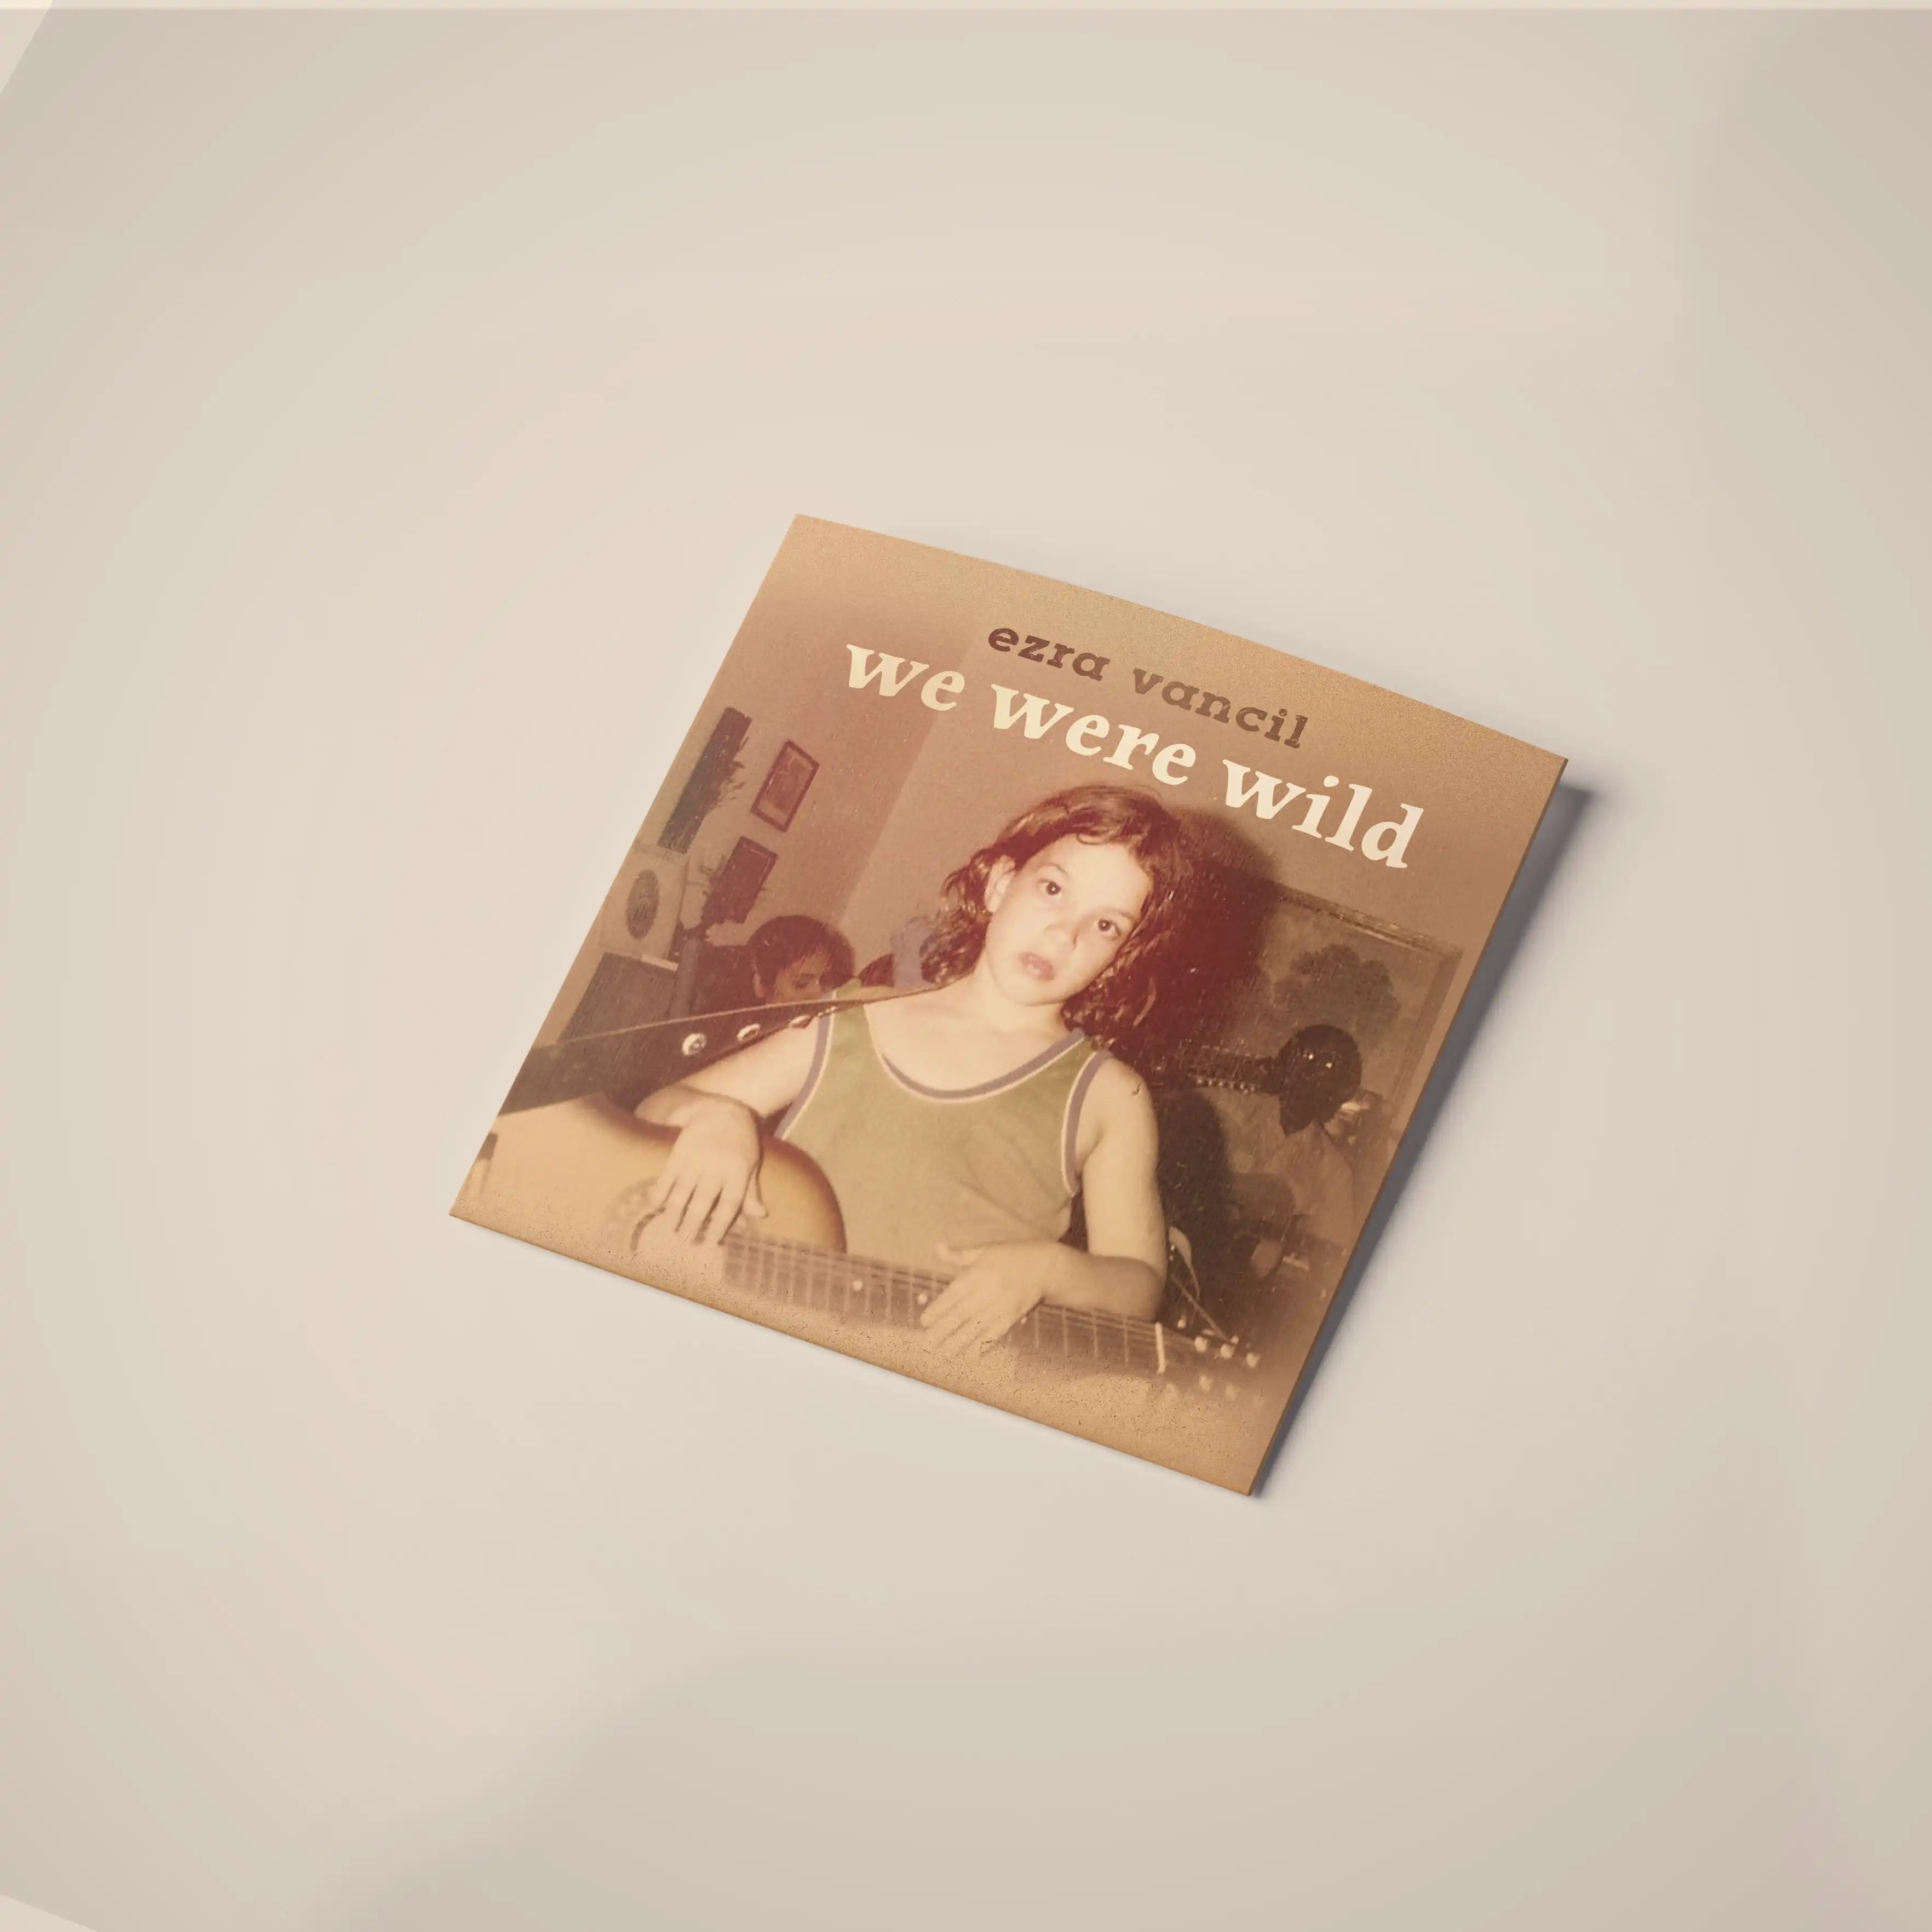 We were wild  [CD + DOWNLOAD]